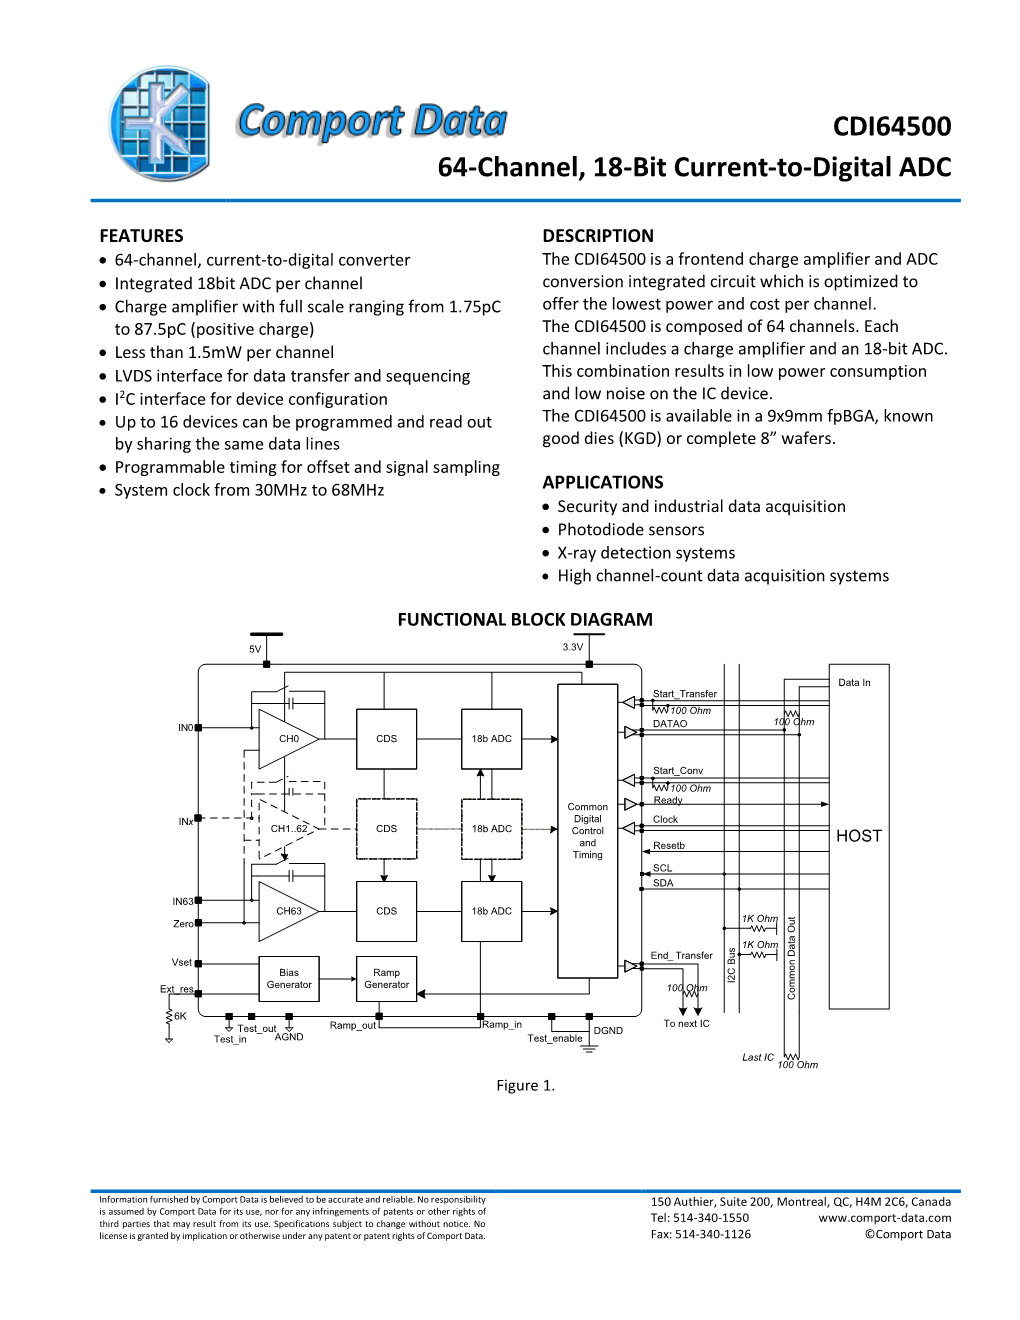 CDI64500 64-Channel, 18-Bit Current-To-Digital